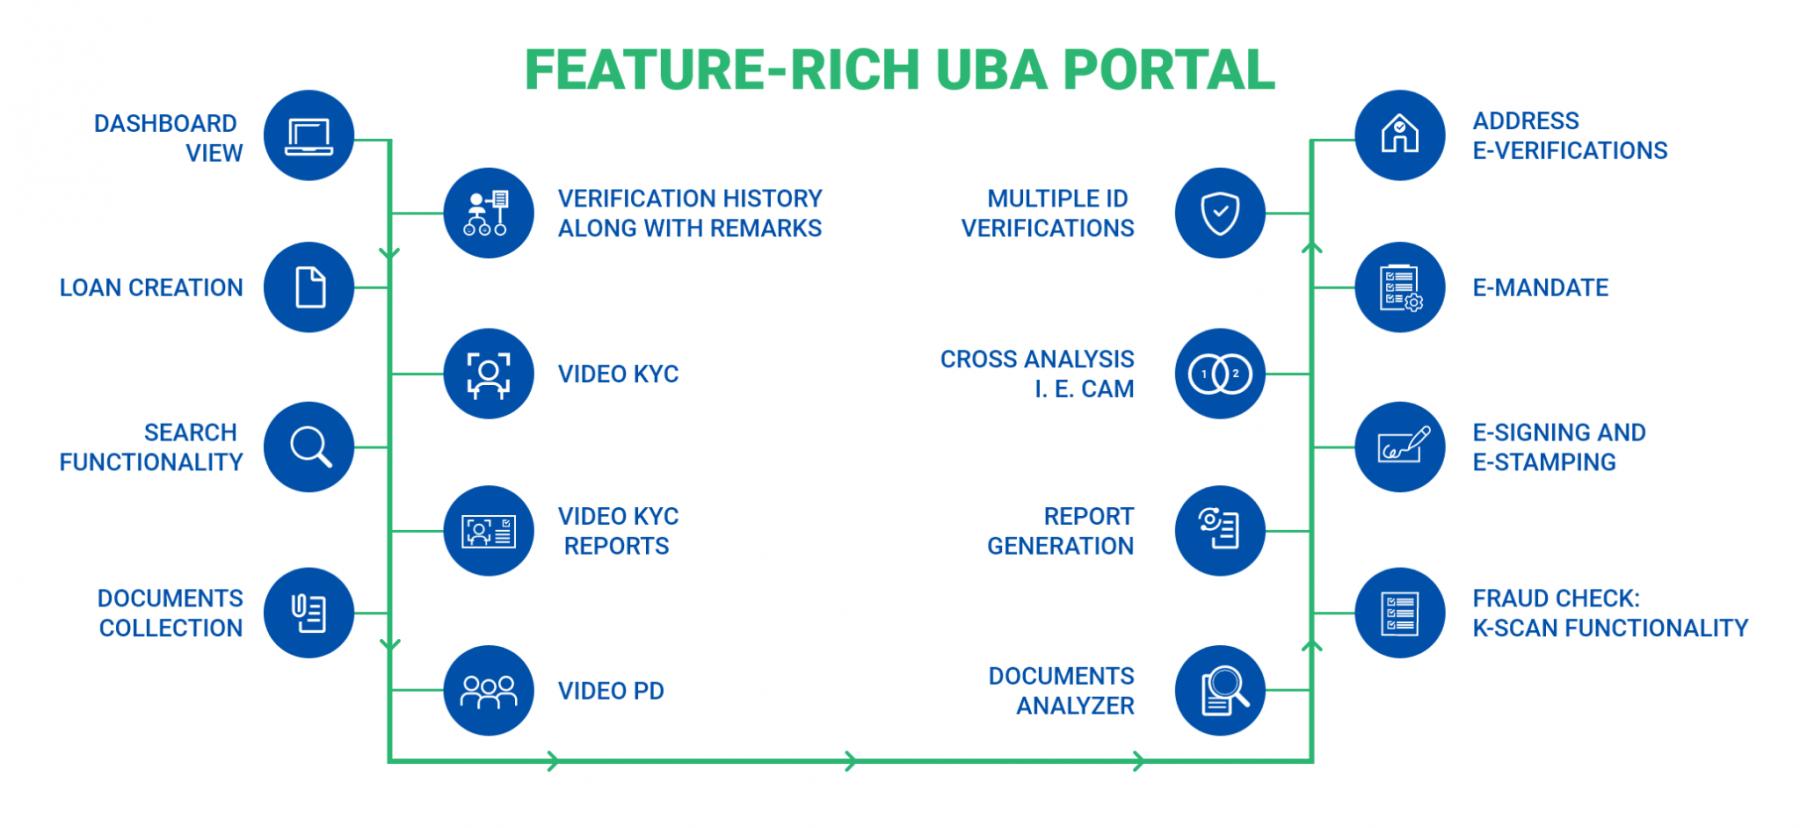 Feature - Rich UBA Portal